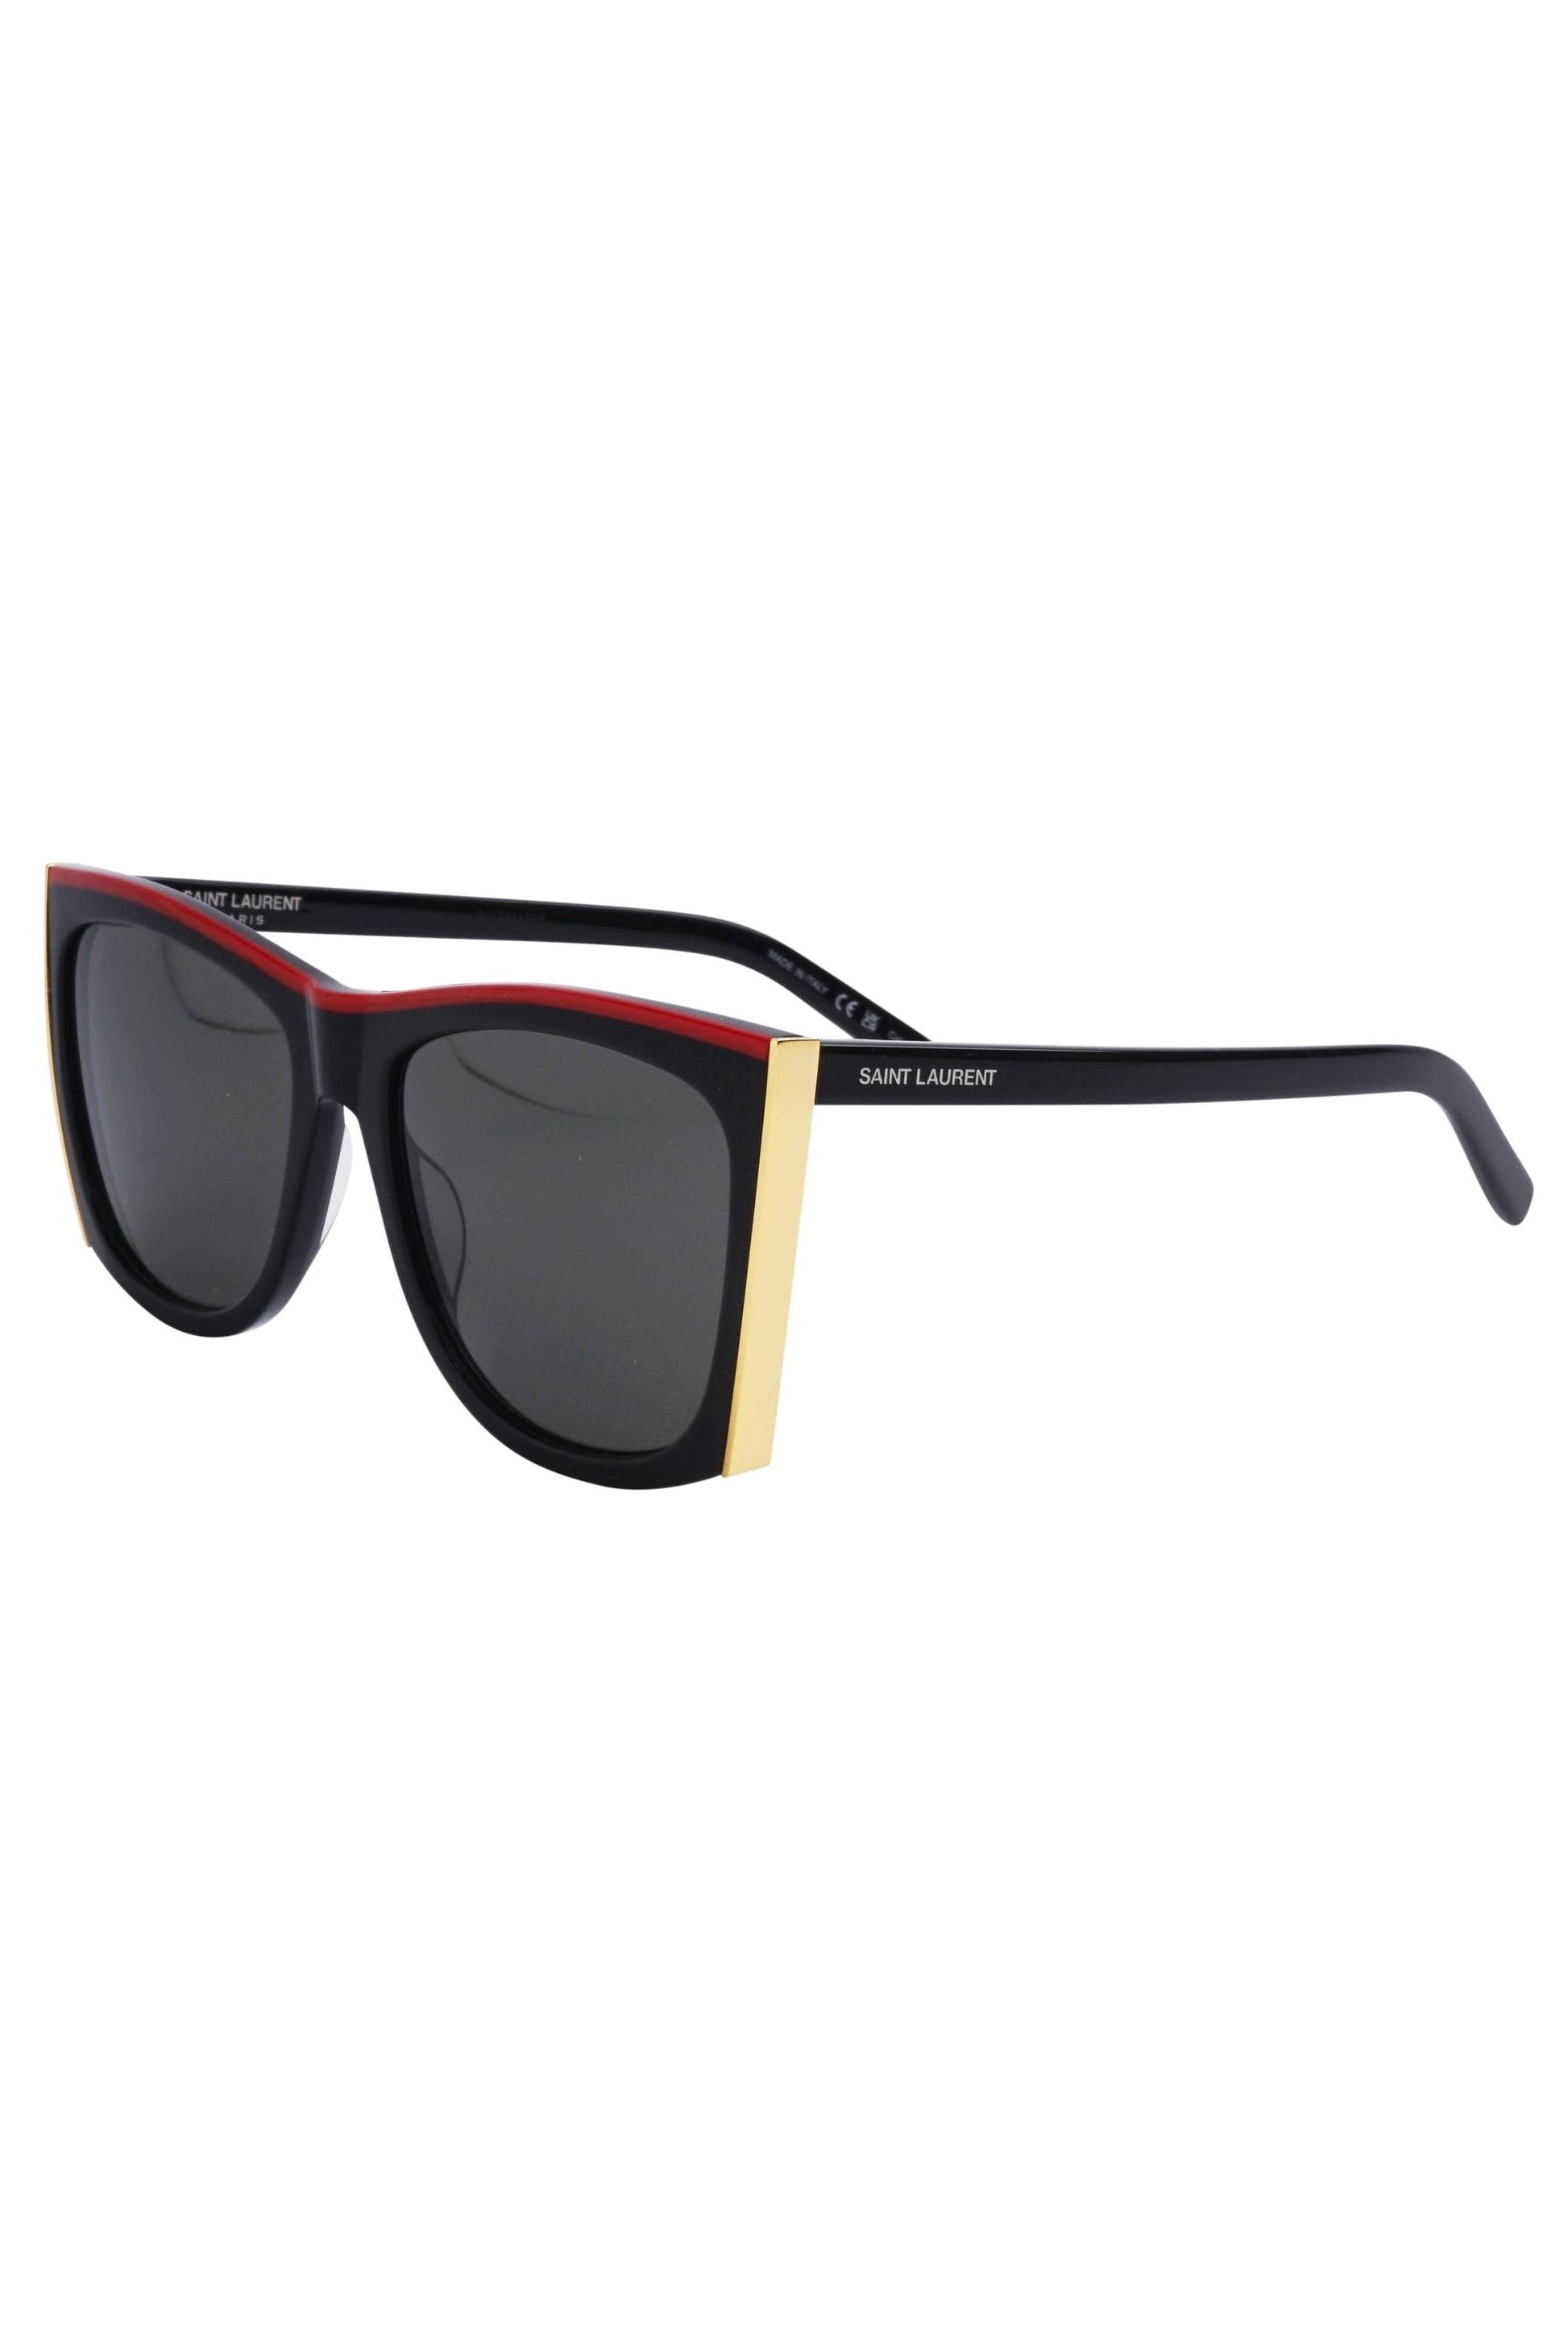 SAINT LAURENT-Cat Eye Tinted Sunglasses-BLACK/GREY